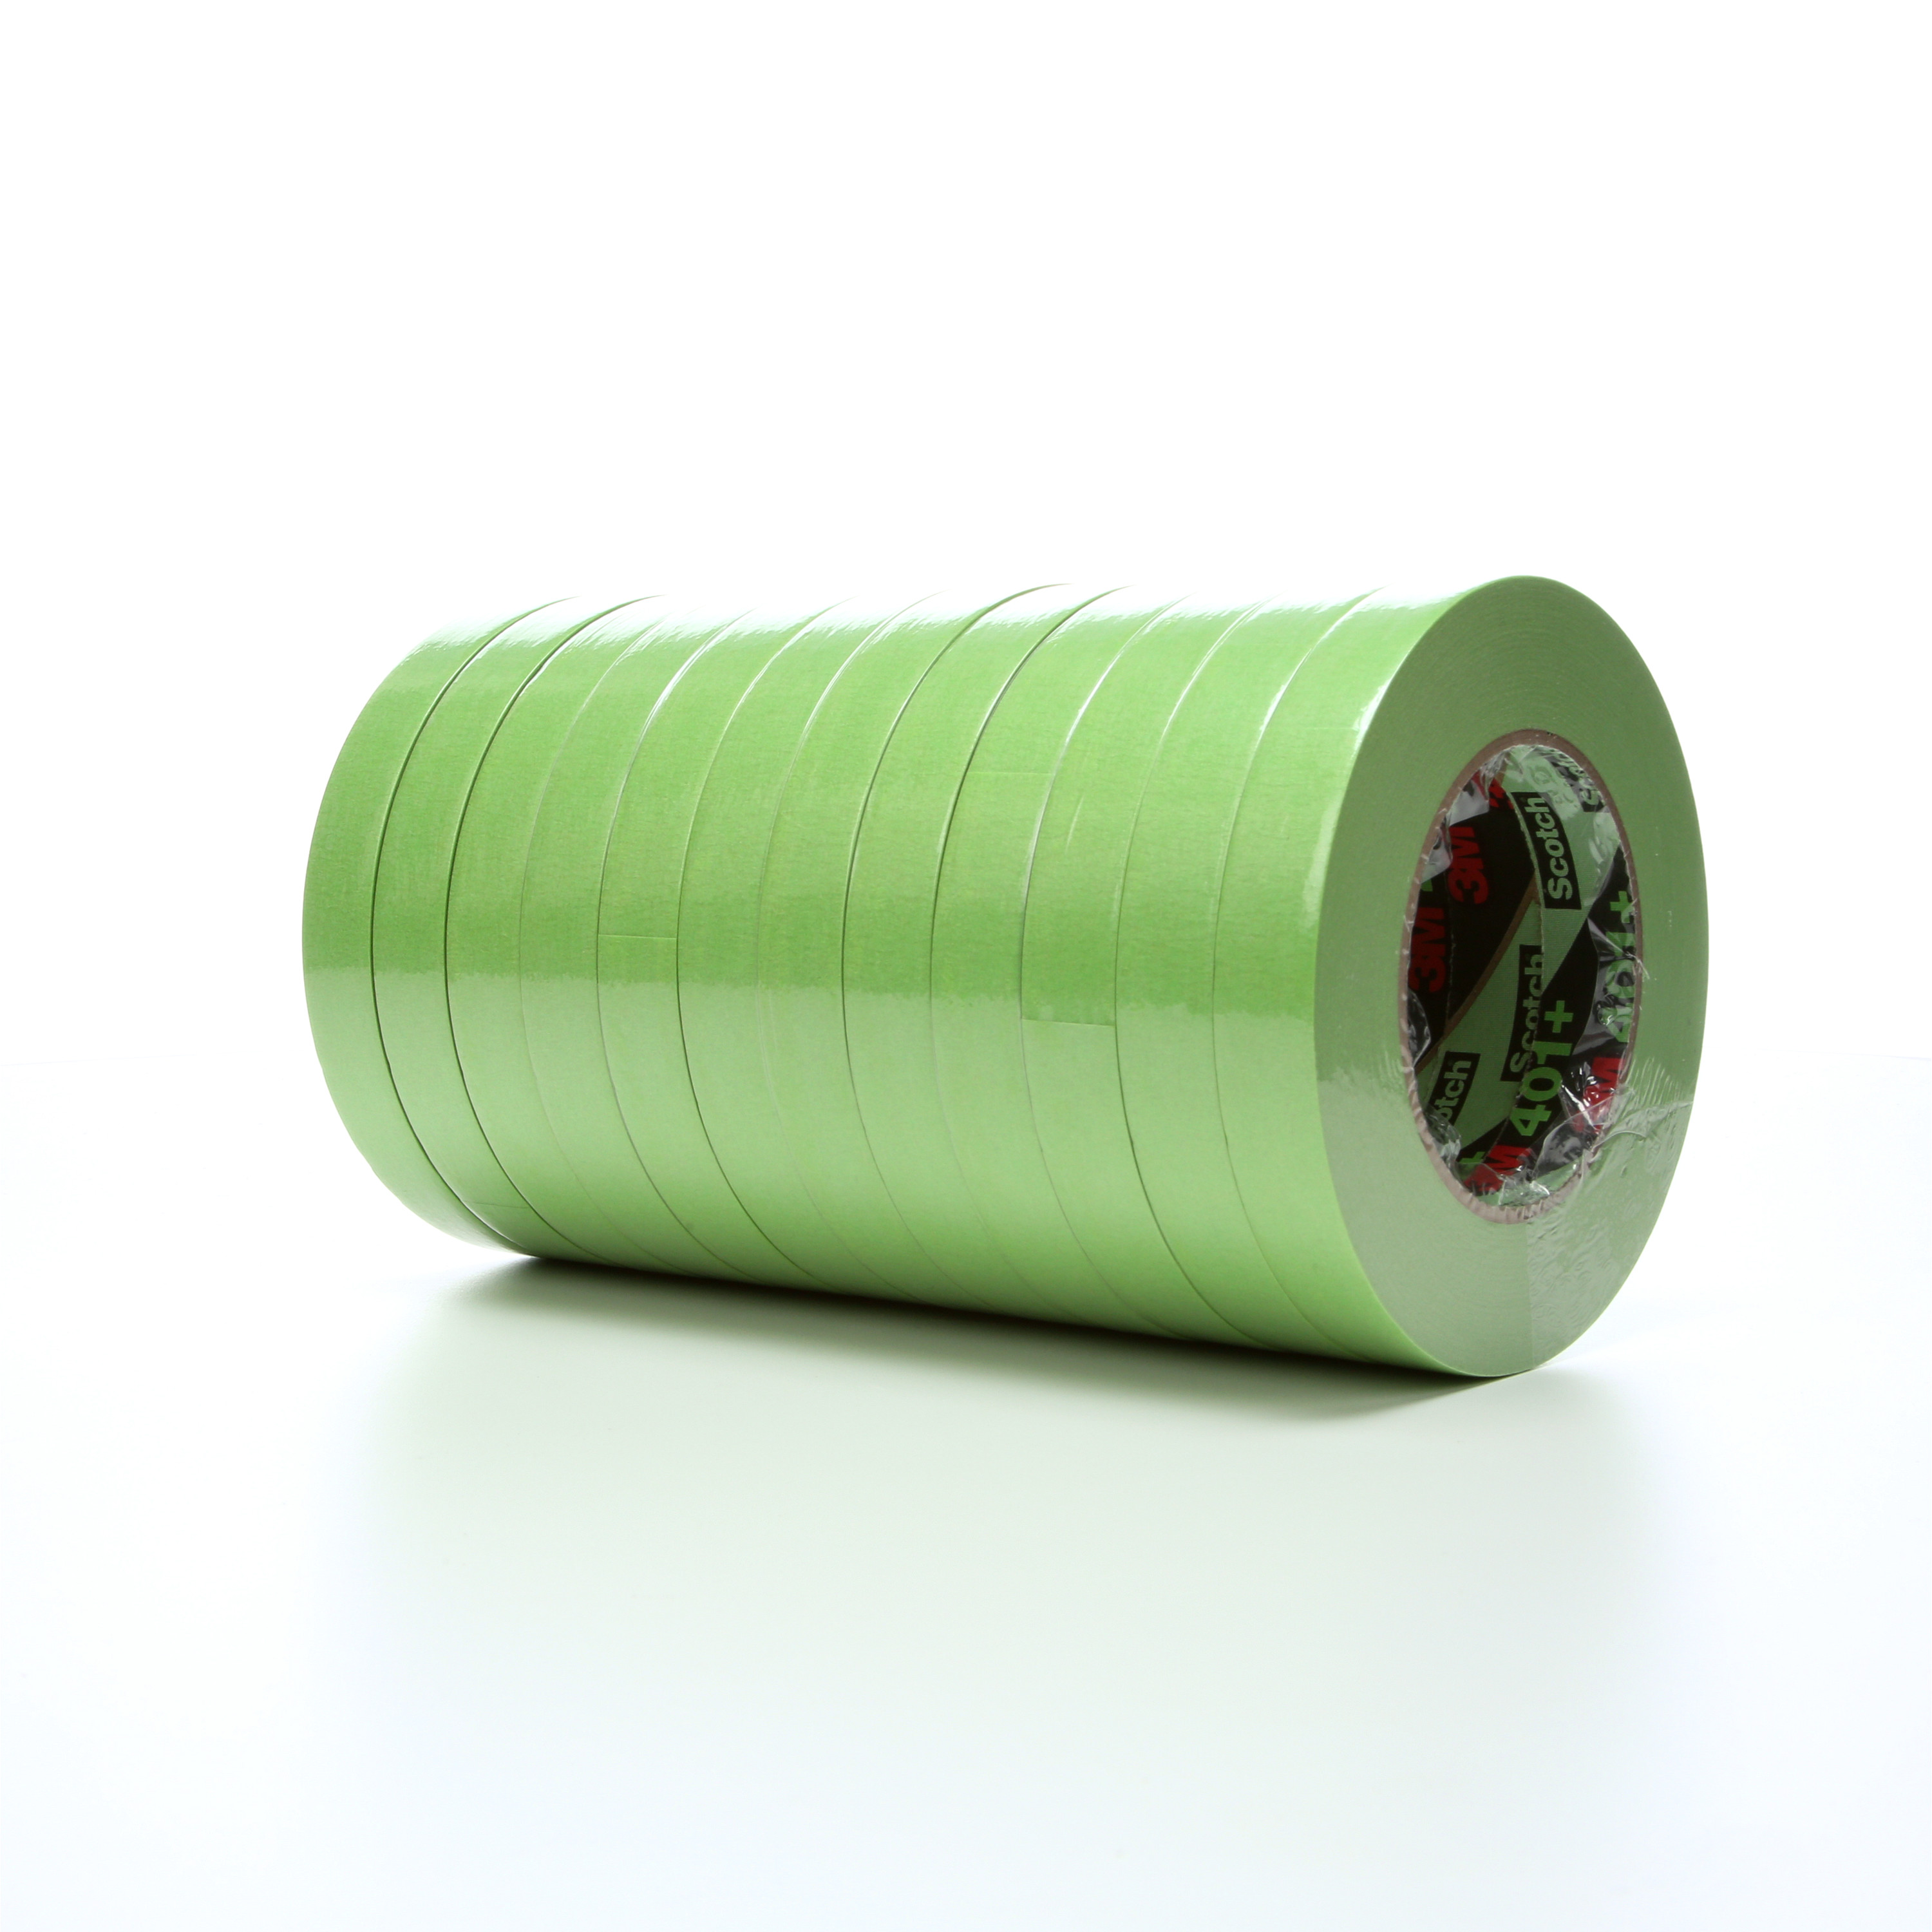 3M™ High Performance Green Masking Tape 401+, 18 mm x 55 m, 48 rolls per
case